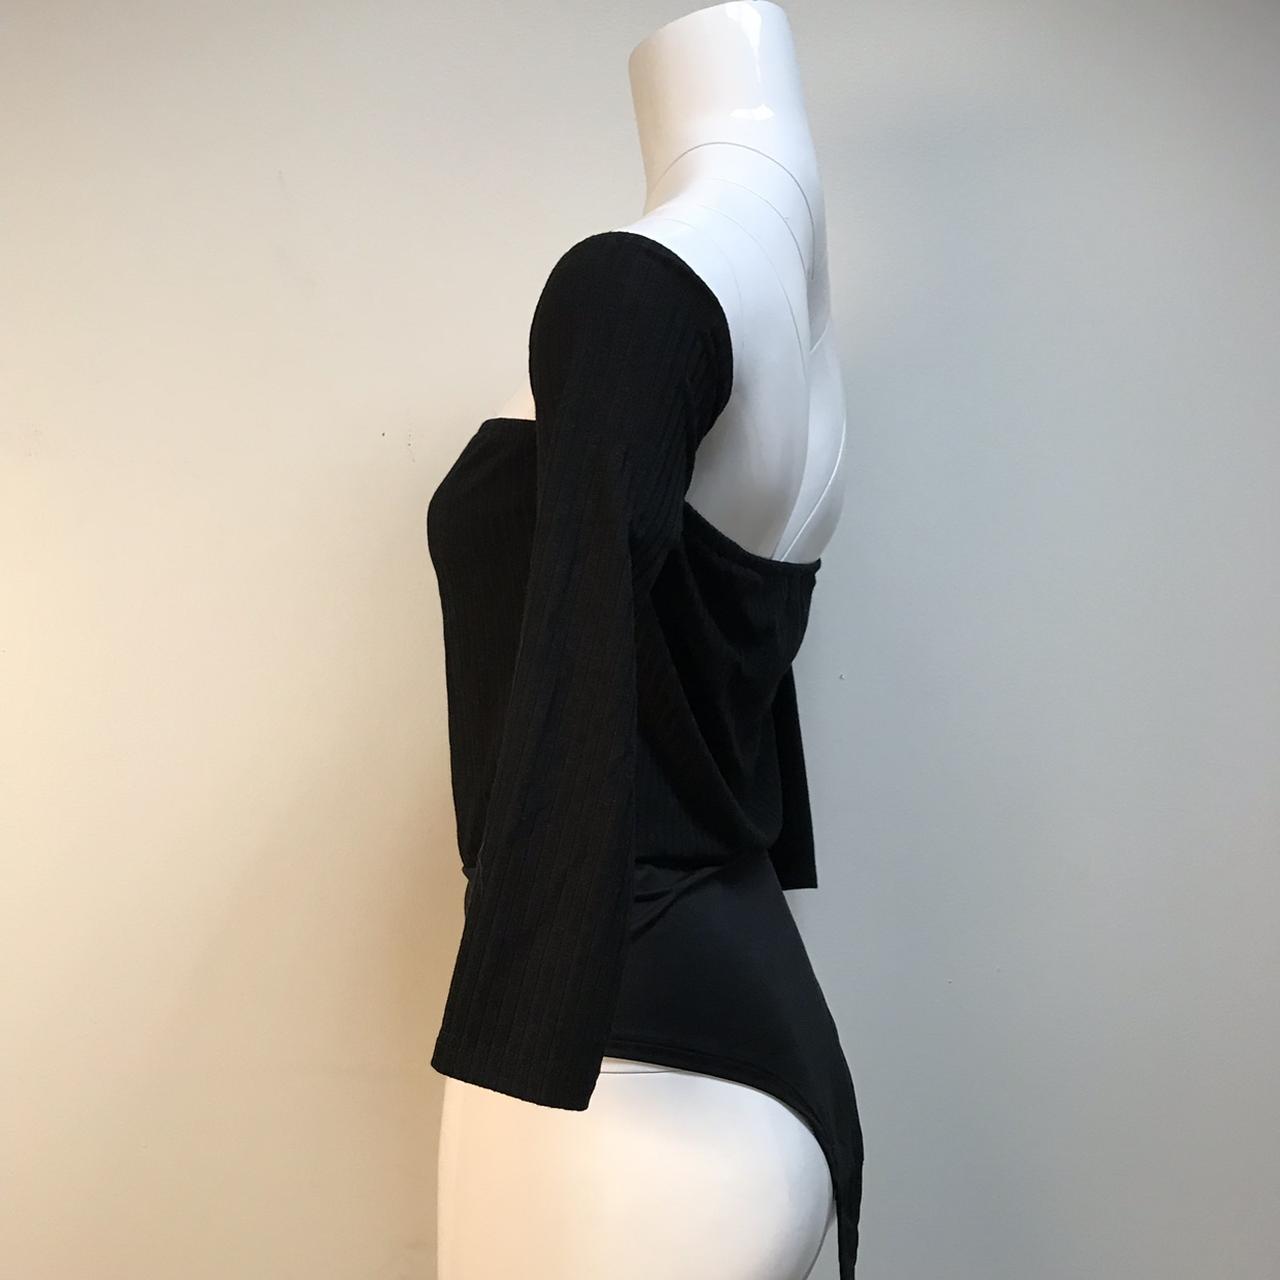 Simplee off the shoulder tube top black bodysuit... - Depop